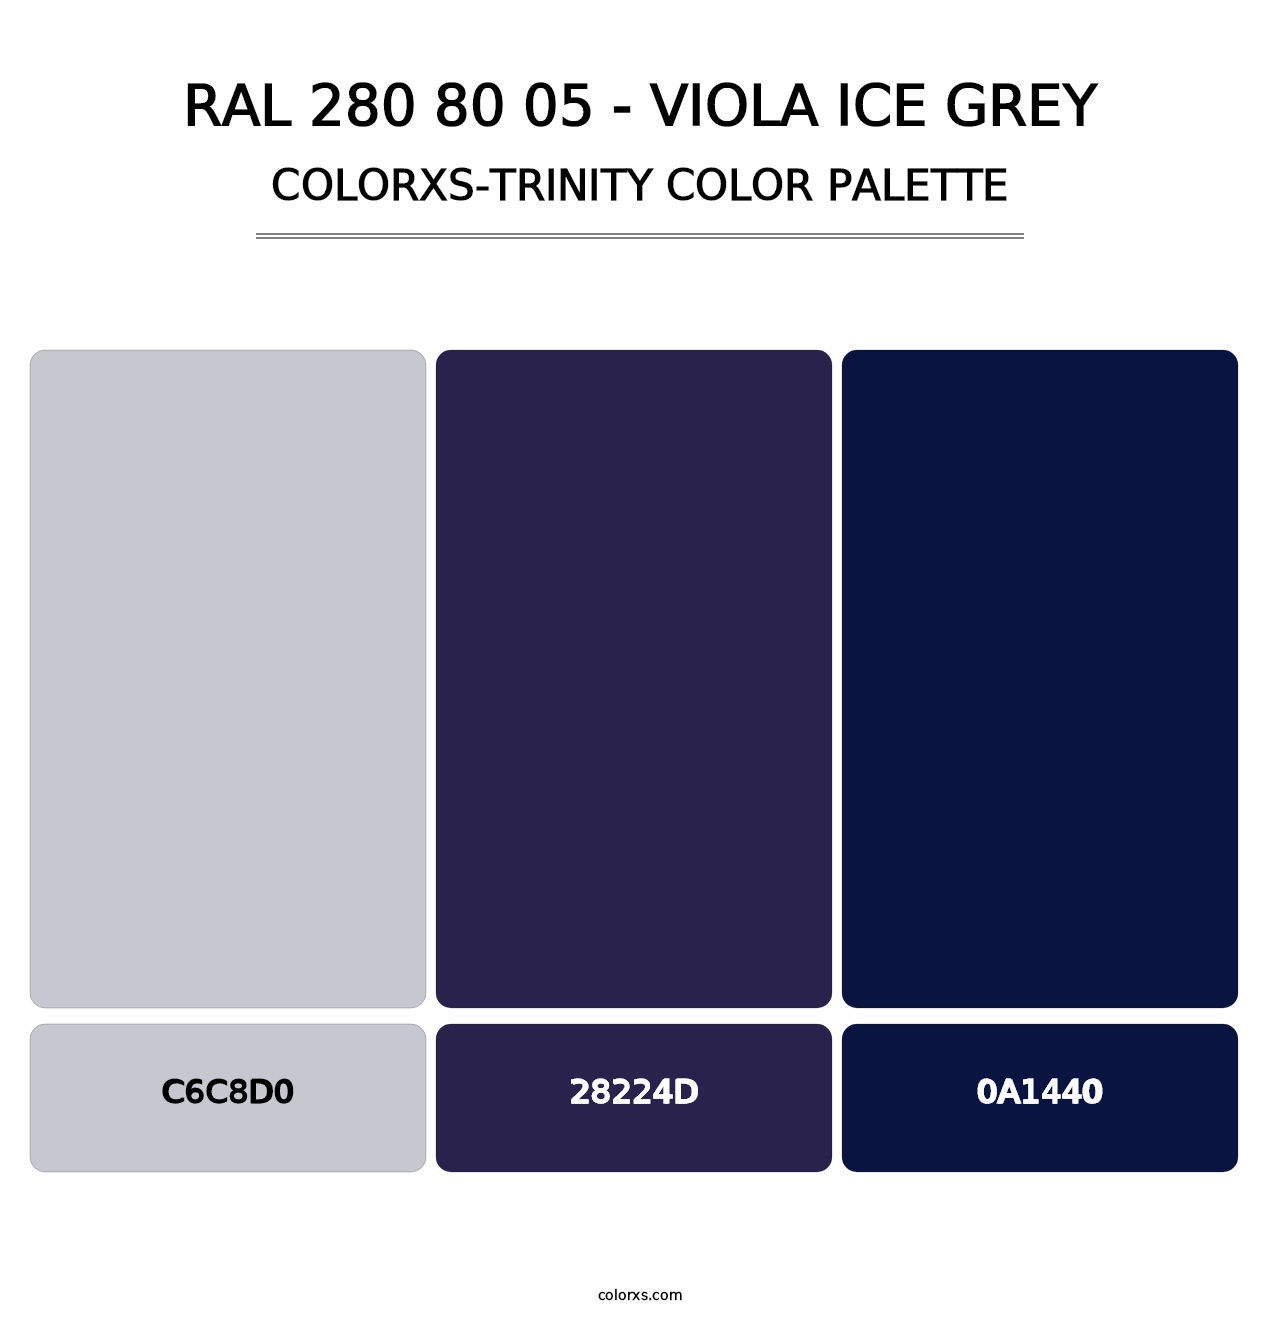 RAL 280 80 05 - Viola Ice Grey - Colorxs Trinity Palette